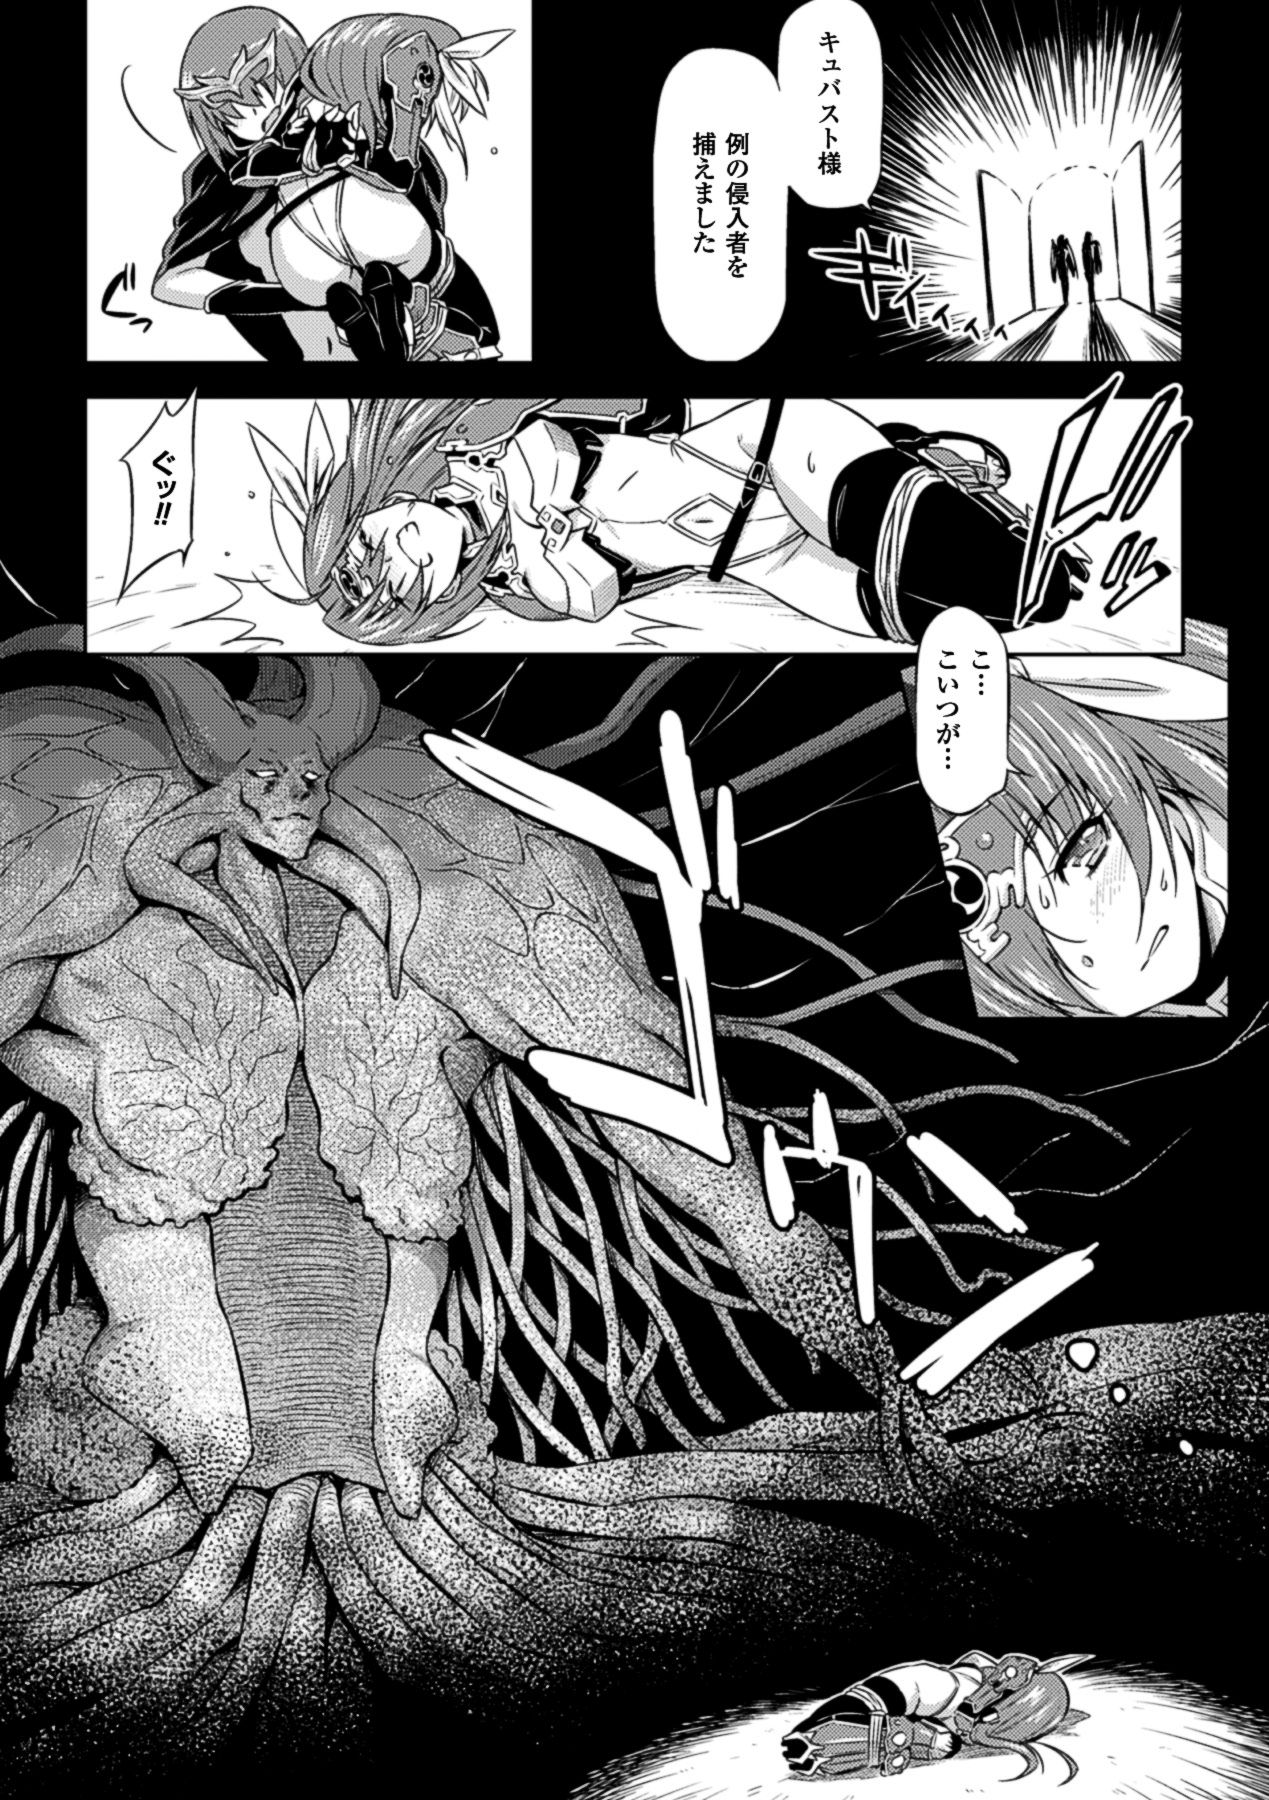 [Anthology] Megami Crisis 13 [Digital] [アンソロジー] メガミクライシス13 [DL版]